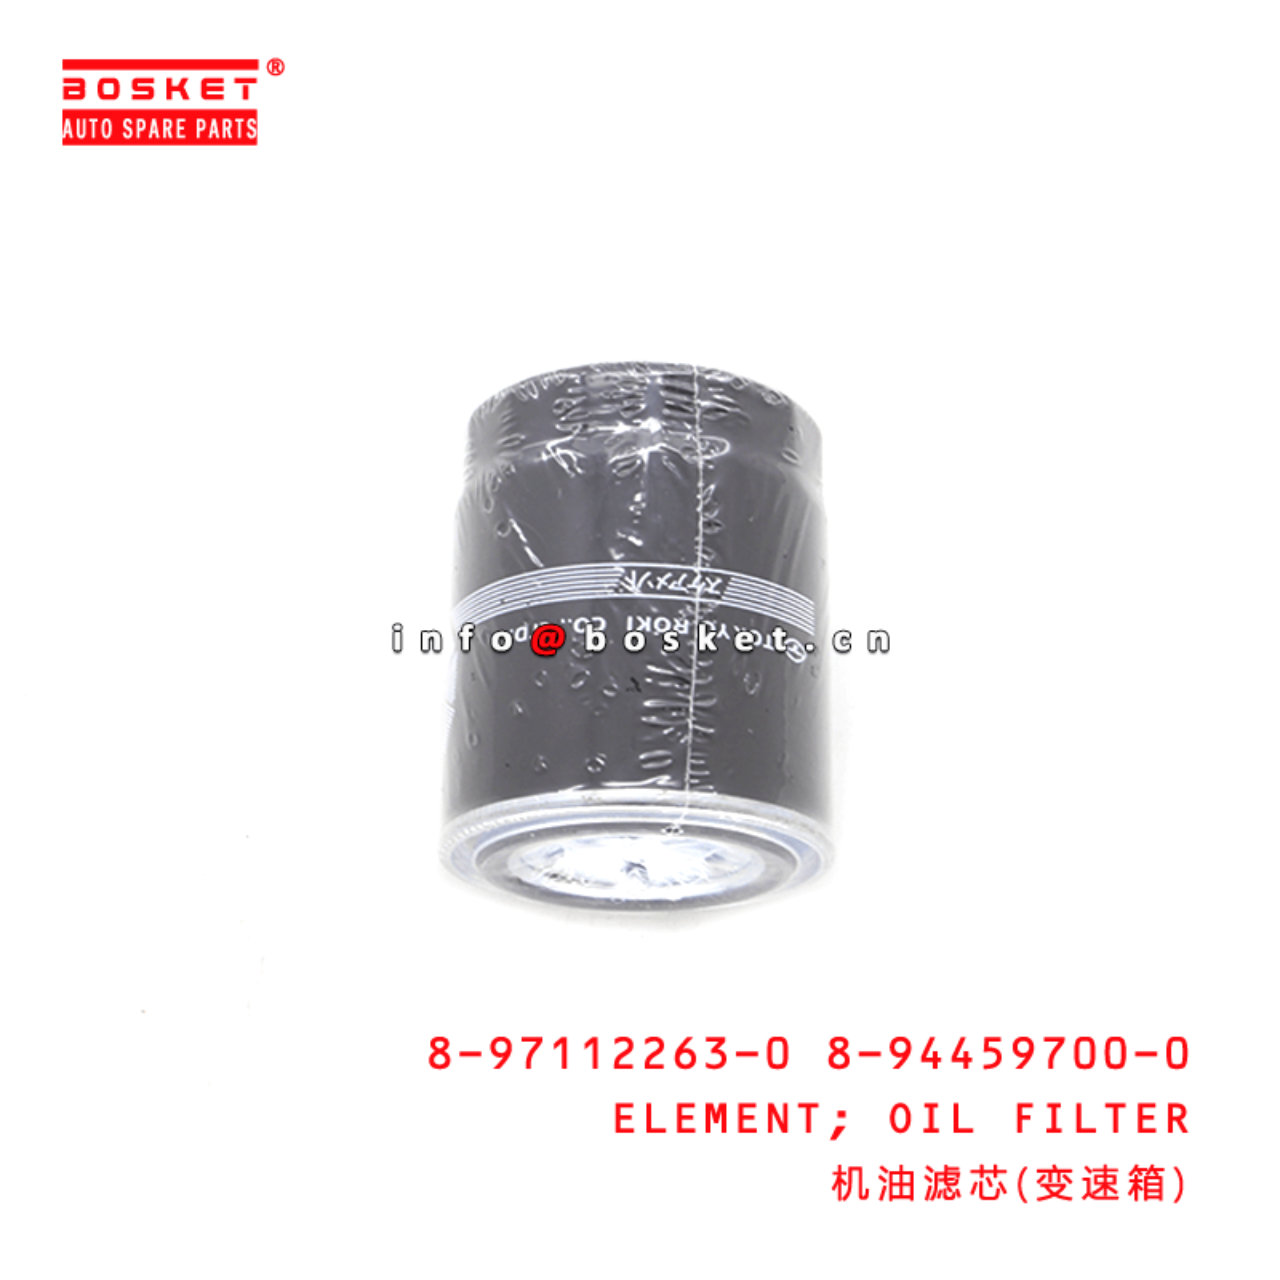 8-97112263-0 8-94459700-0 Oil Filter Element 8971122630 8944597000 Suitable for ISUZU CXZ81 10PE1